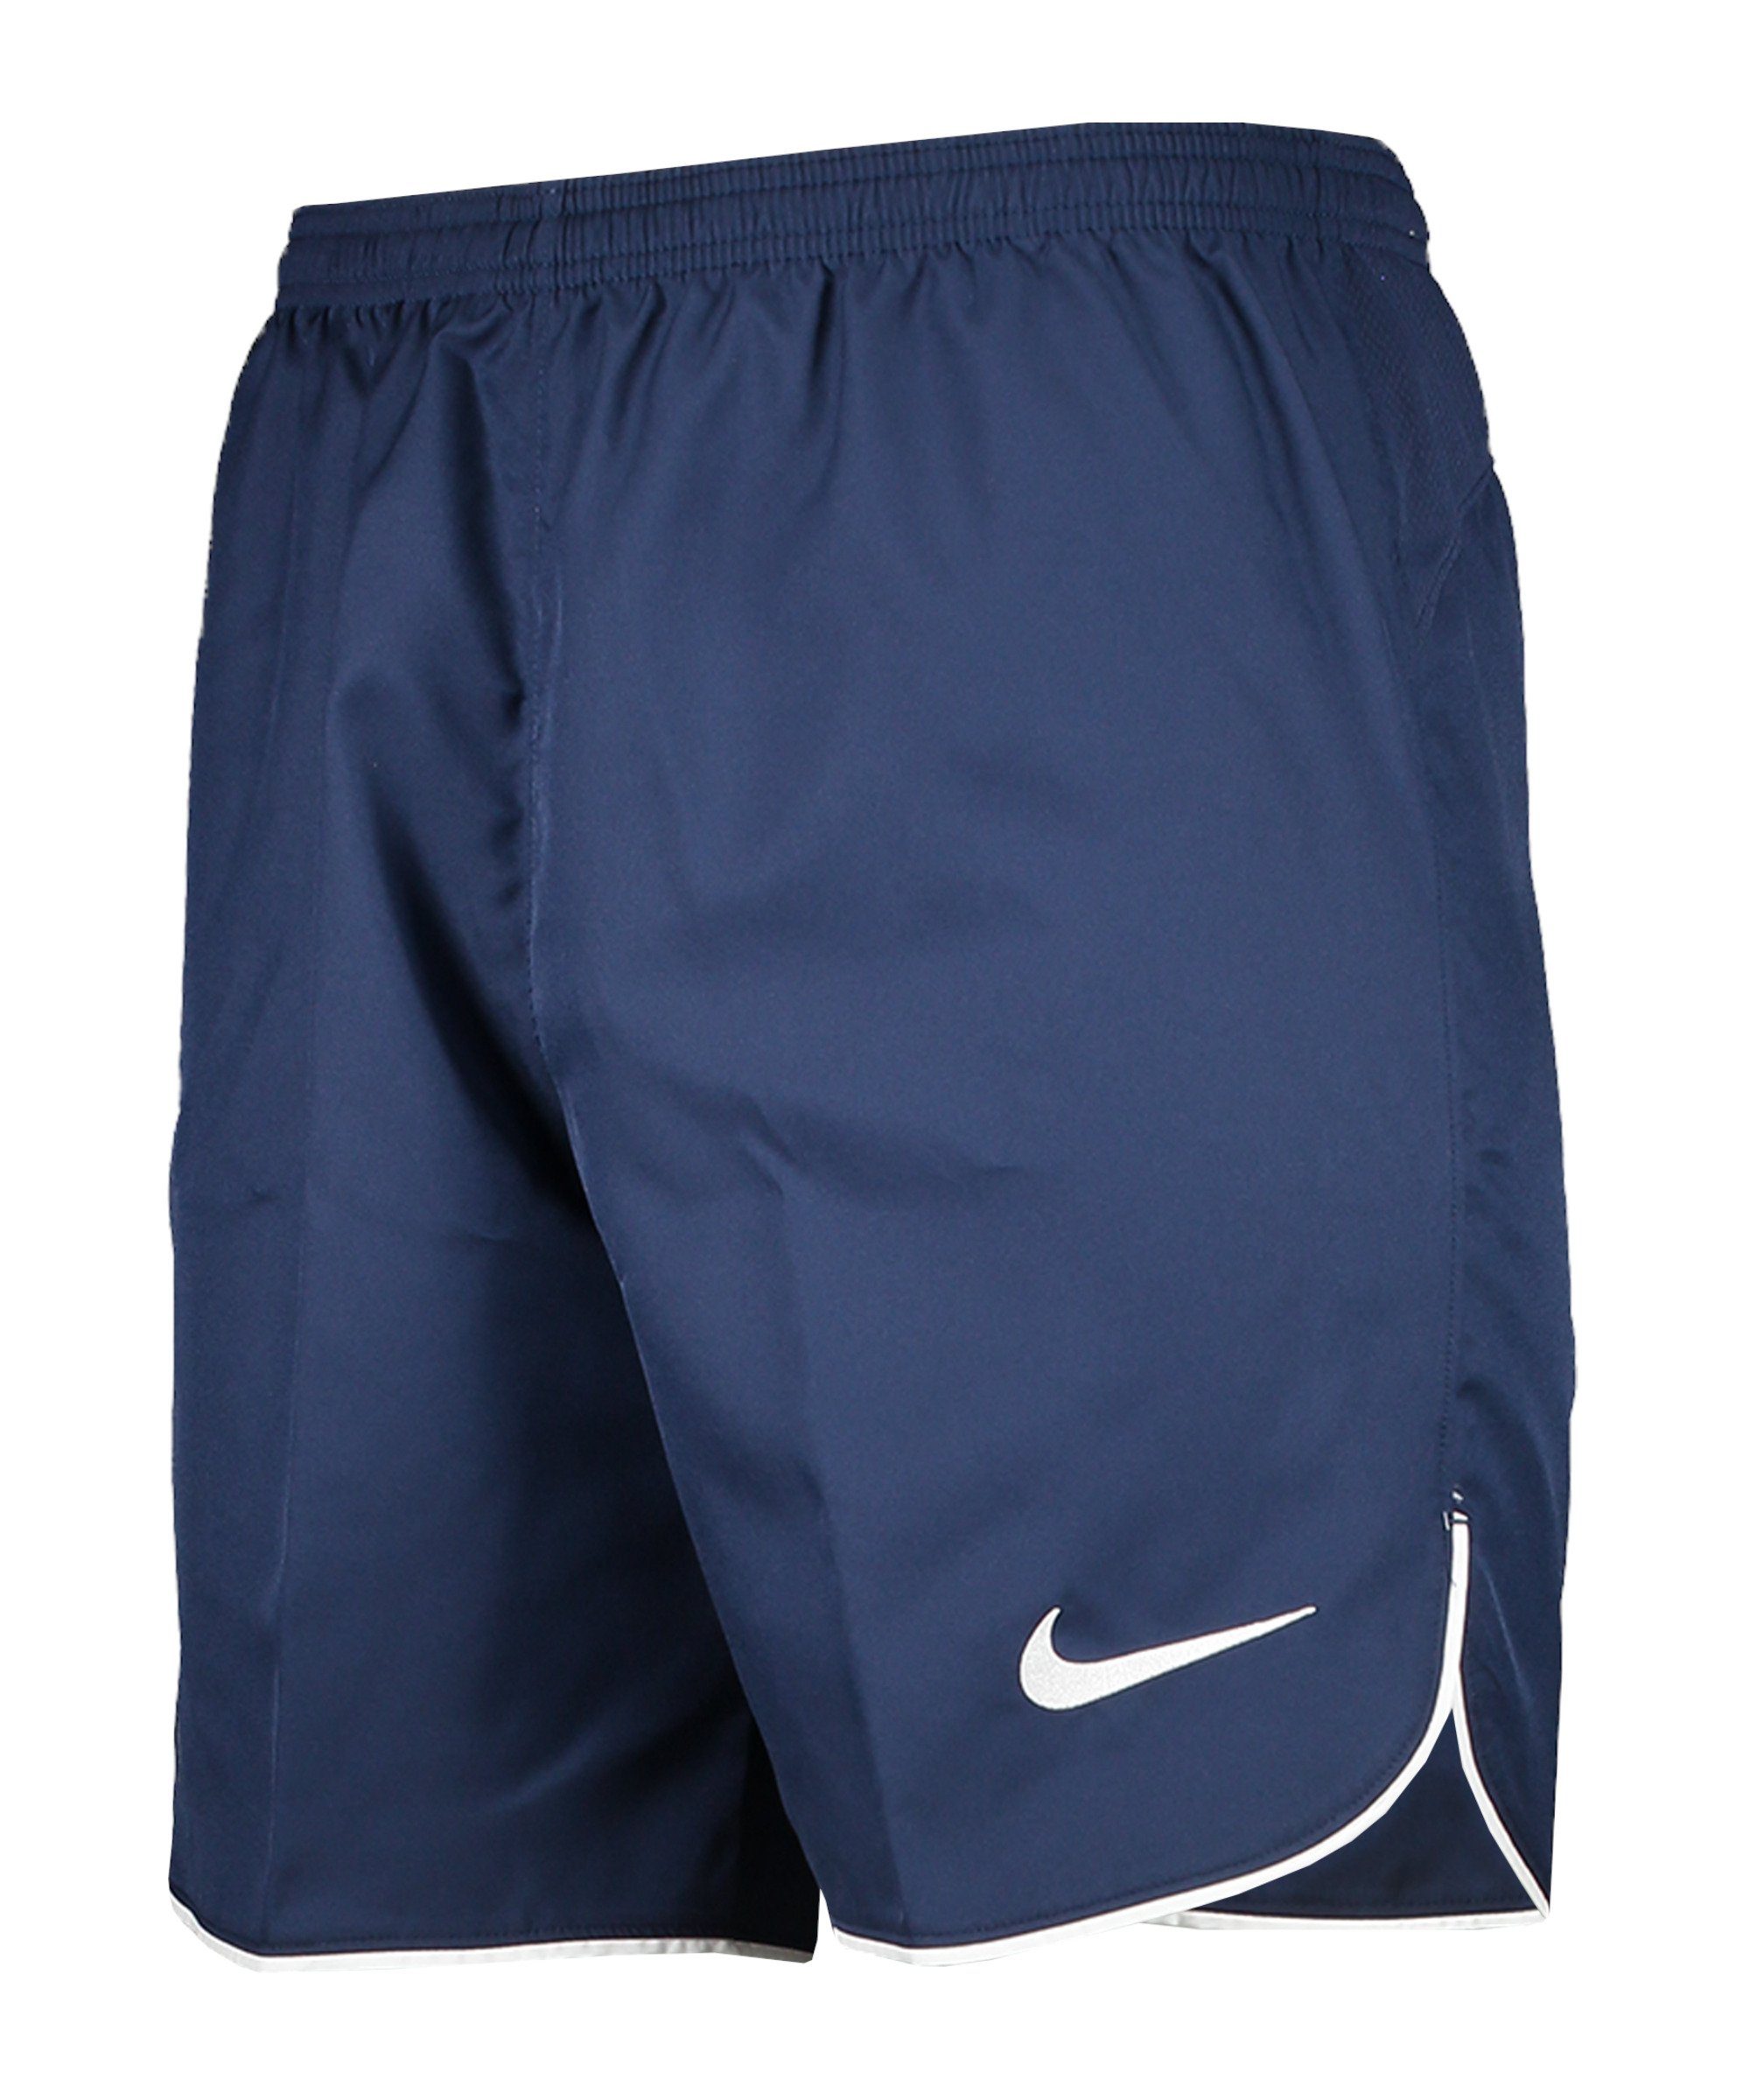 Nike Sporthose blau Woven Short Laser V